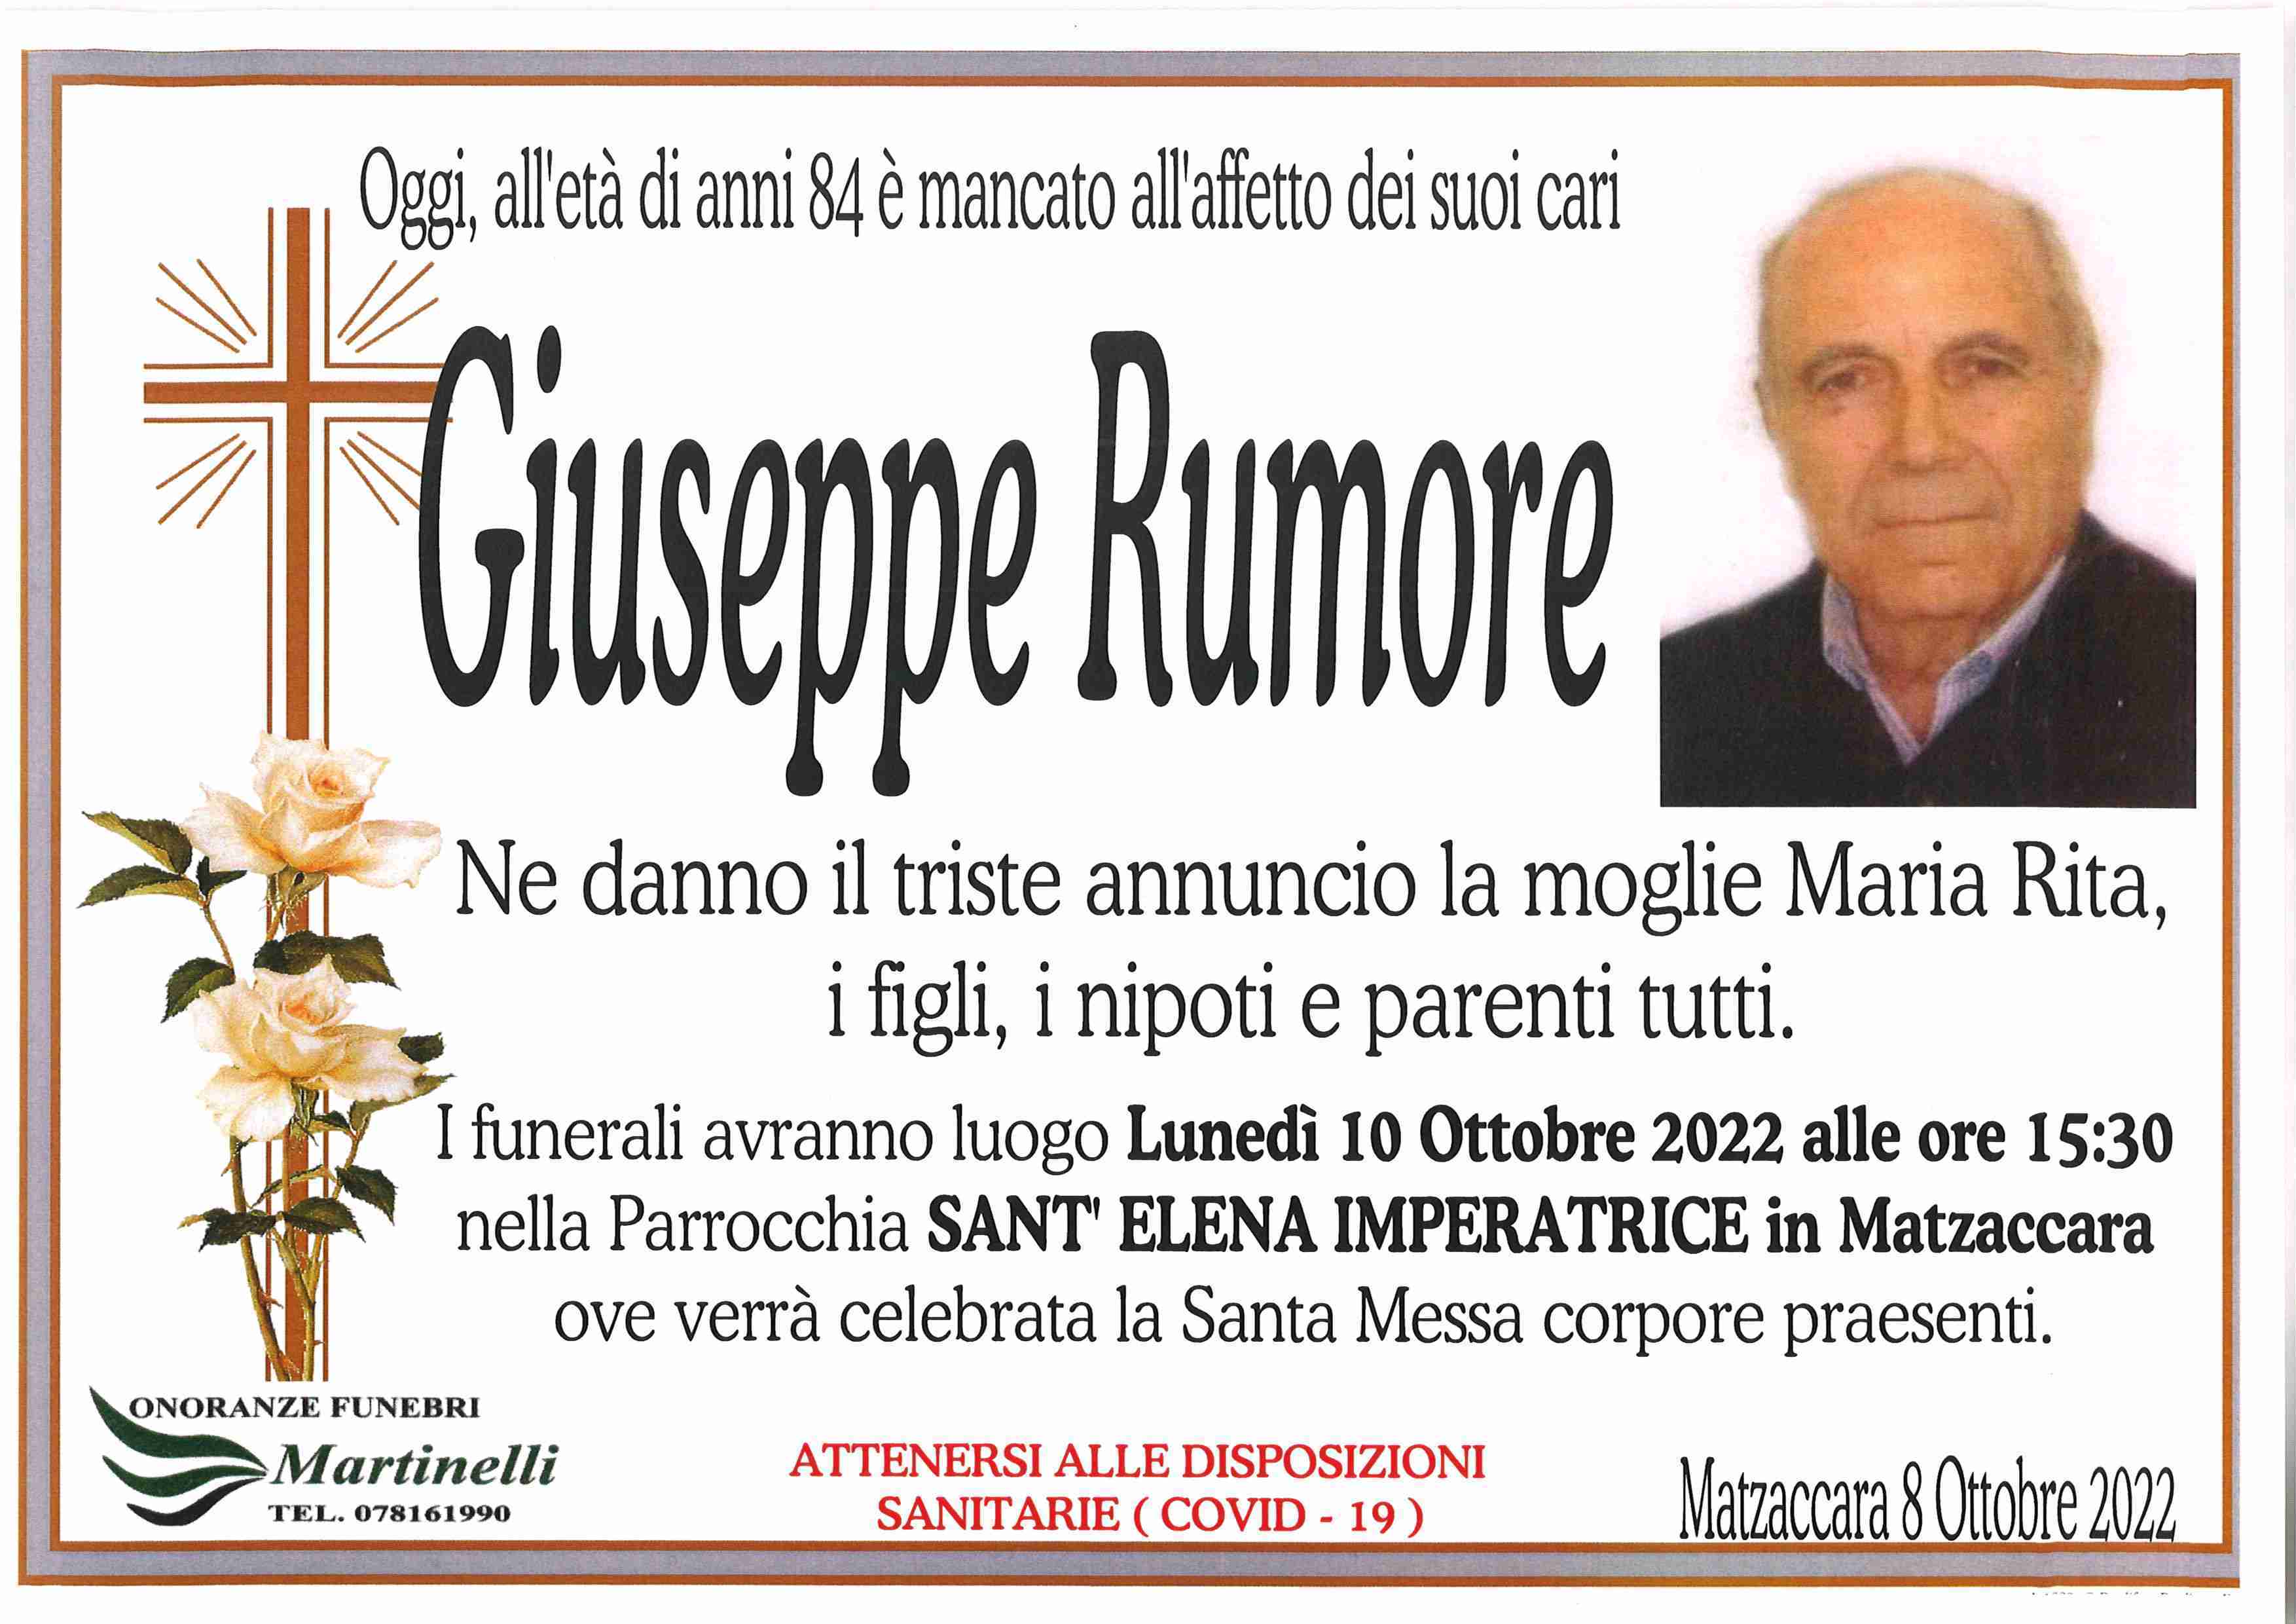 Giuseppe Rumore